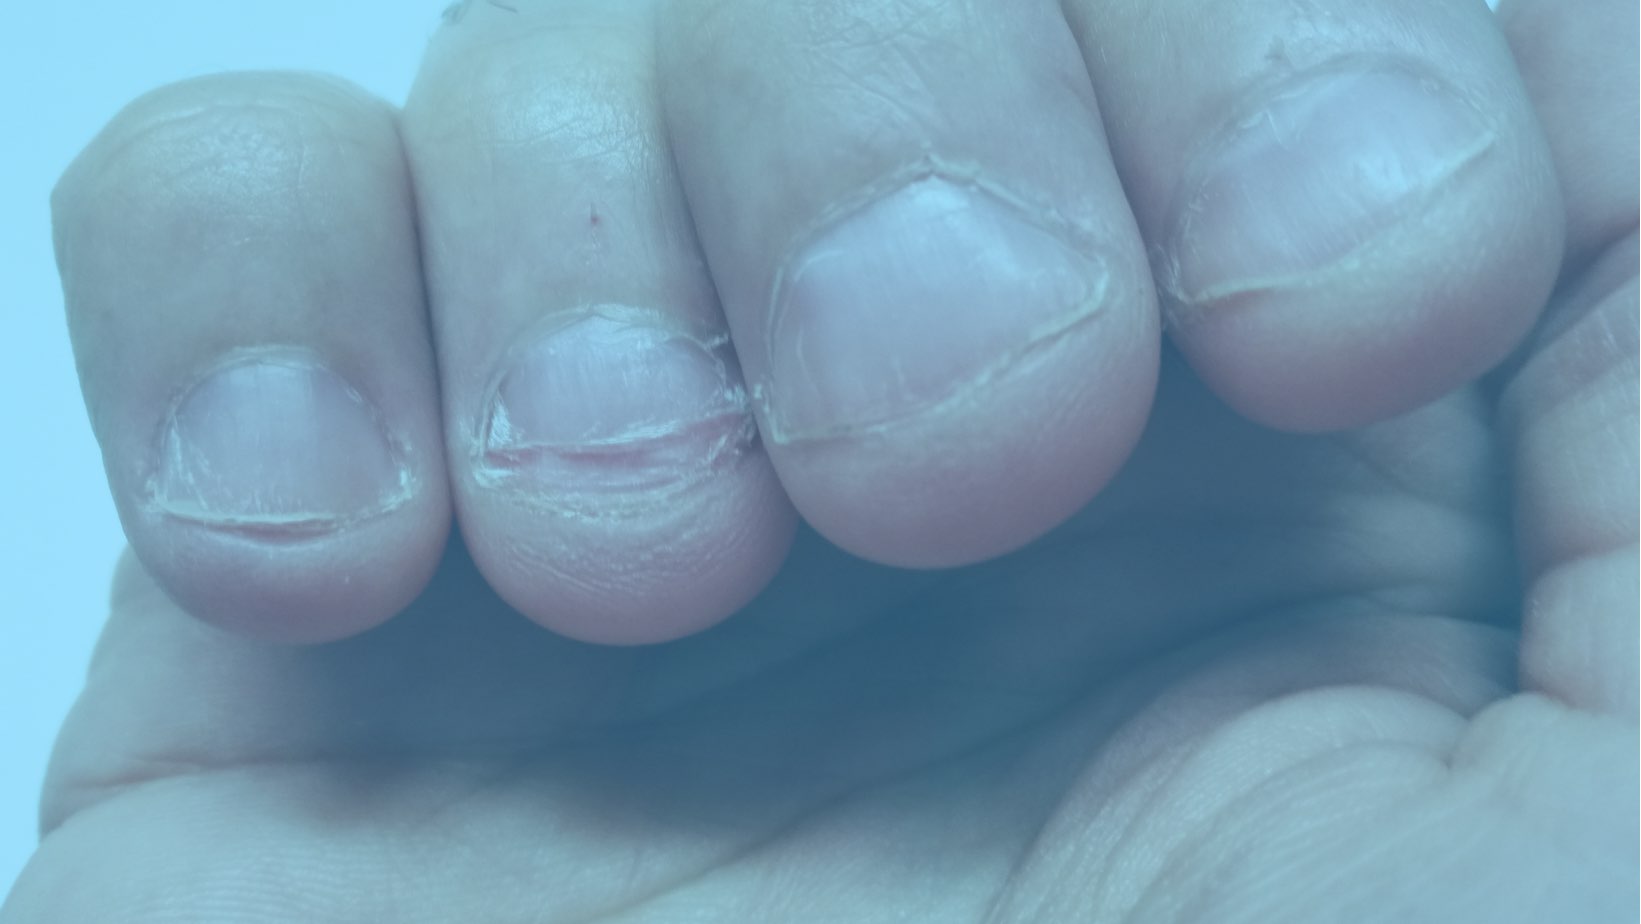 White Spots on Nails (Leukonychia): Causes & Treatment